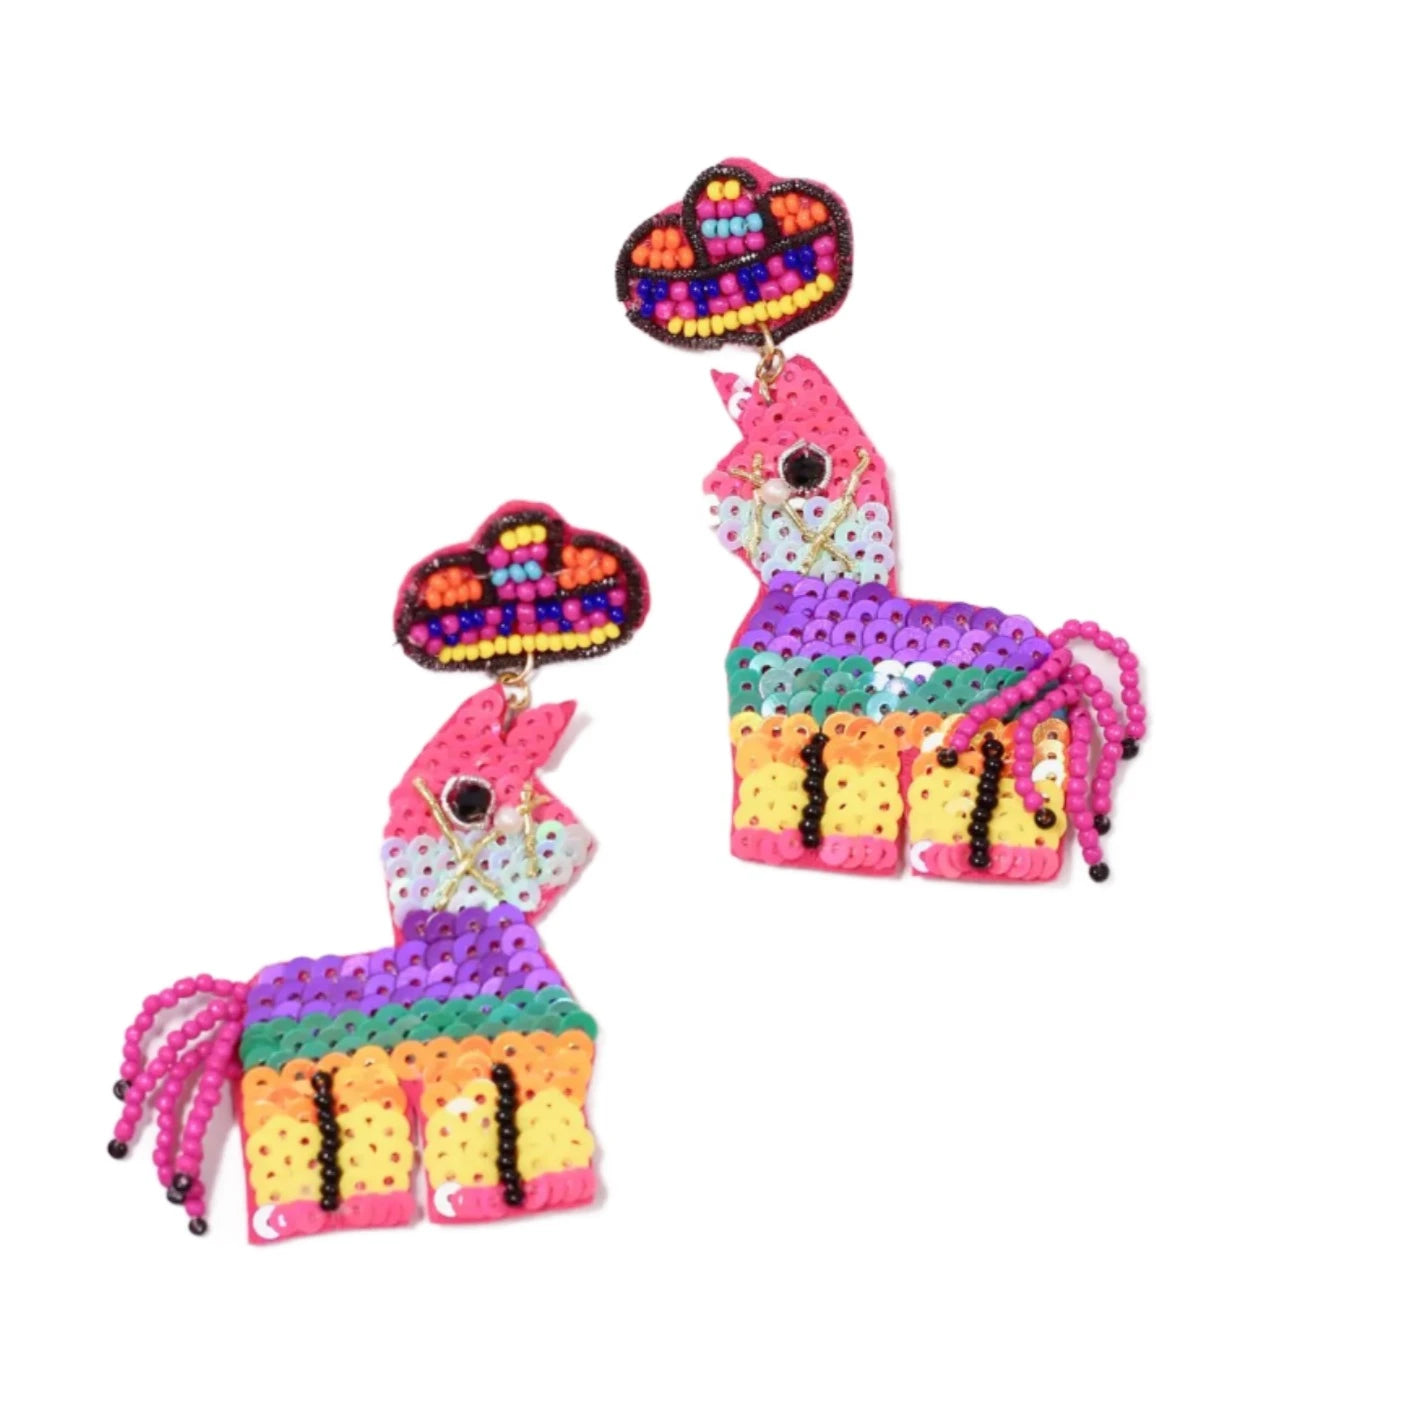 Embellished Piñata Earring - Multi